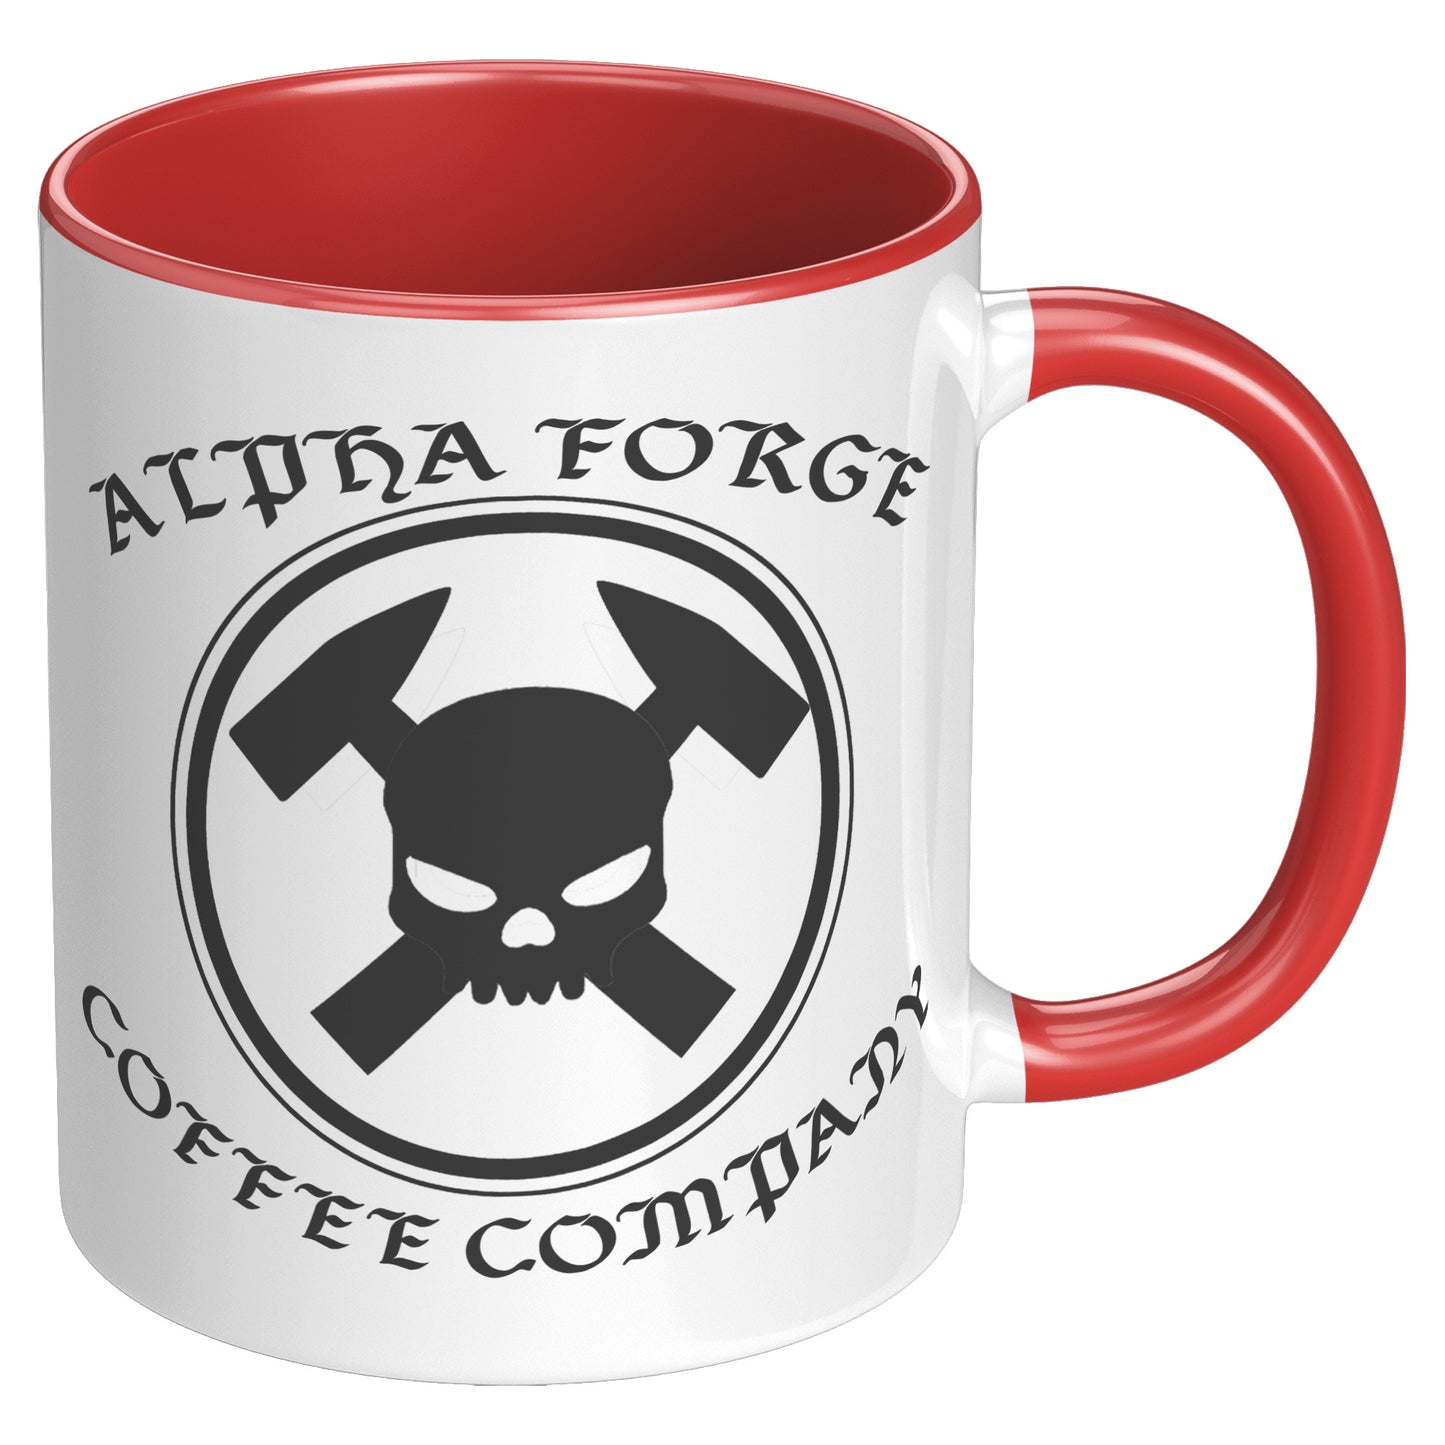 Alpha Forge Coffee Co. 11oz Accent Mug